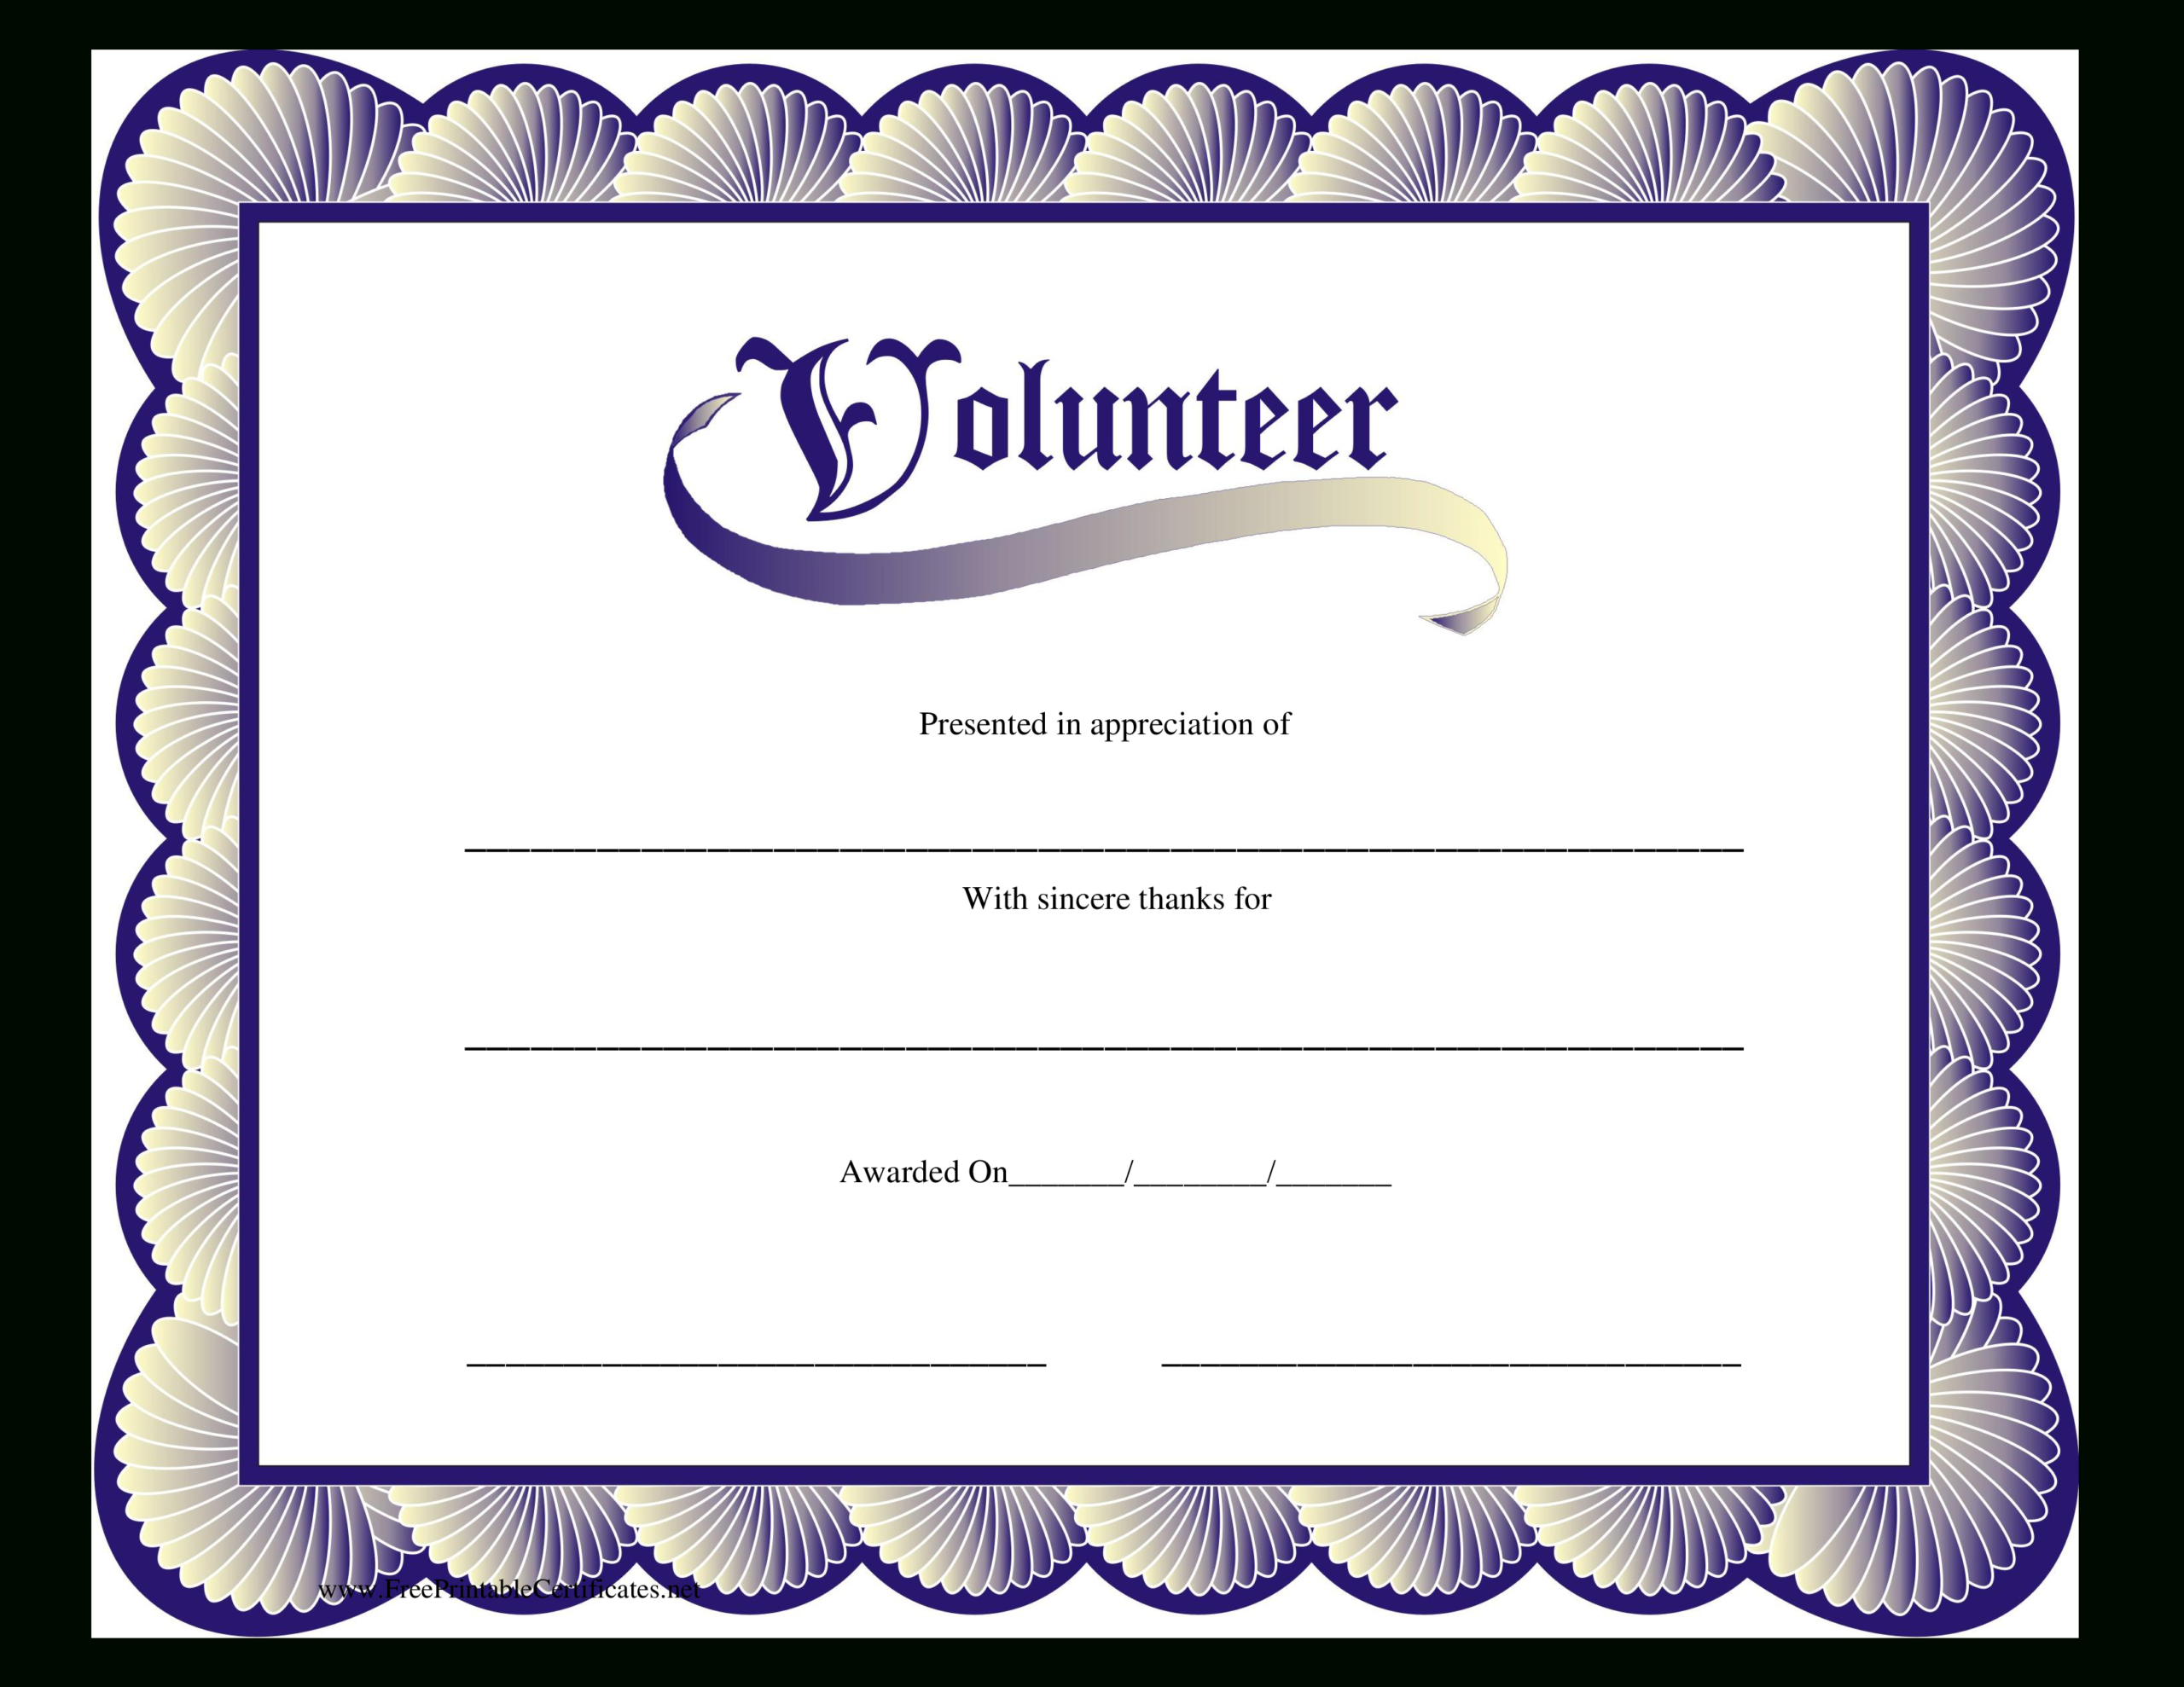 Volunteer Certificate | Templates At Allbusinesstemplates With Volunteer Of The Year Certificate Template